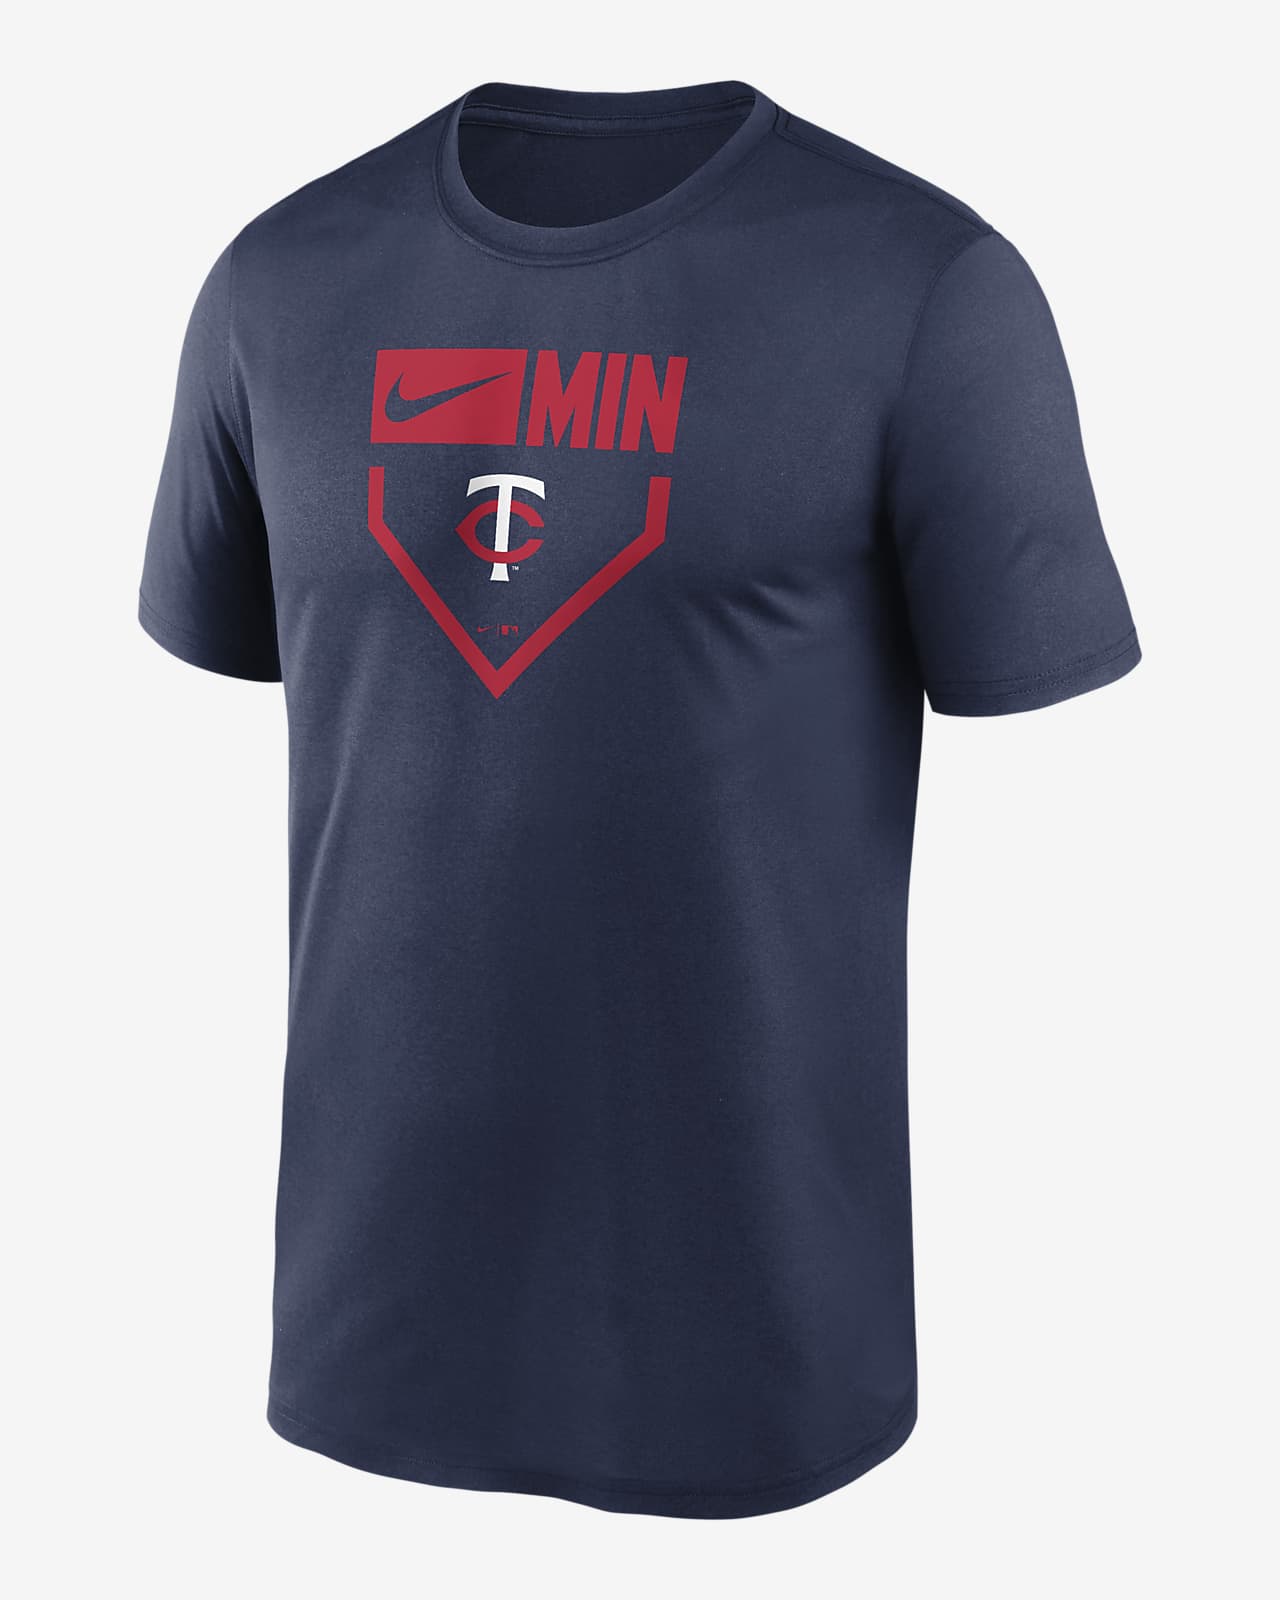 Playera Nike Dri-FIT de la MLB para hombre Minnesota Twins Home Plate Icon Legend